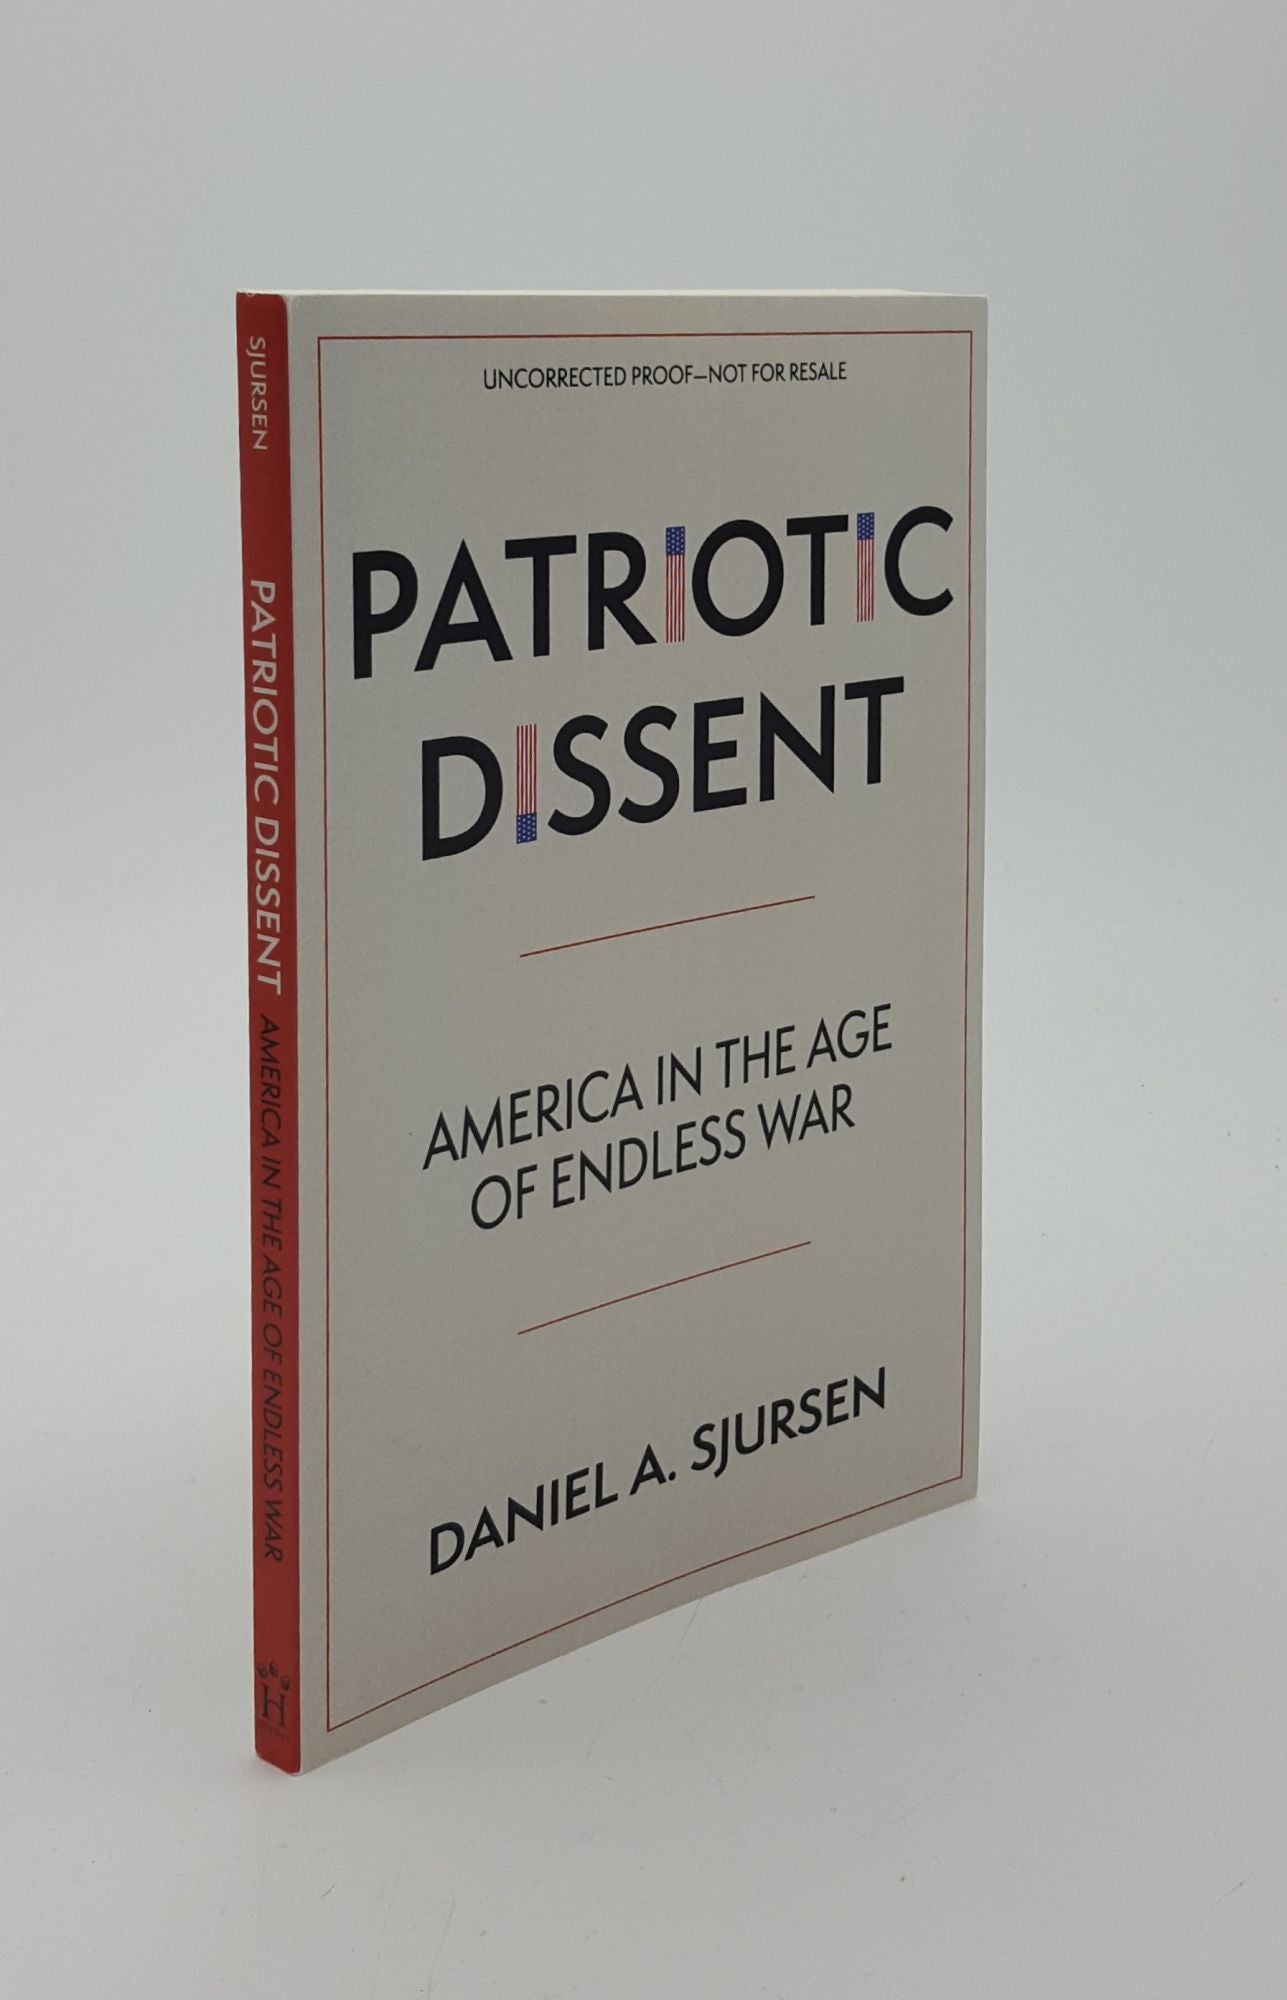 SJURSEN Daniel A. - Patriotic Dissent America in the Age of Endless War